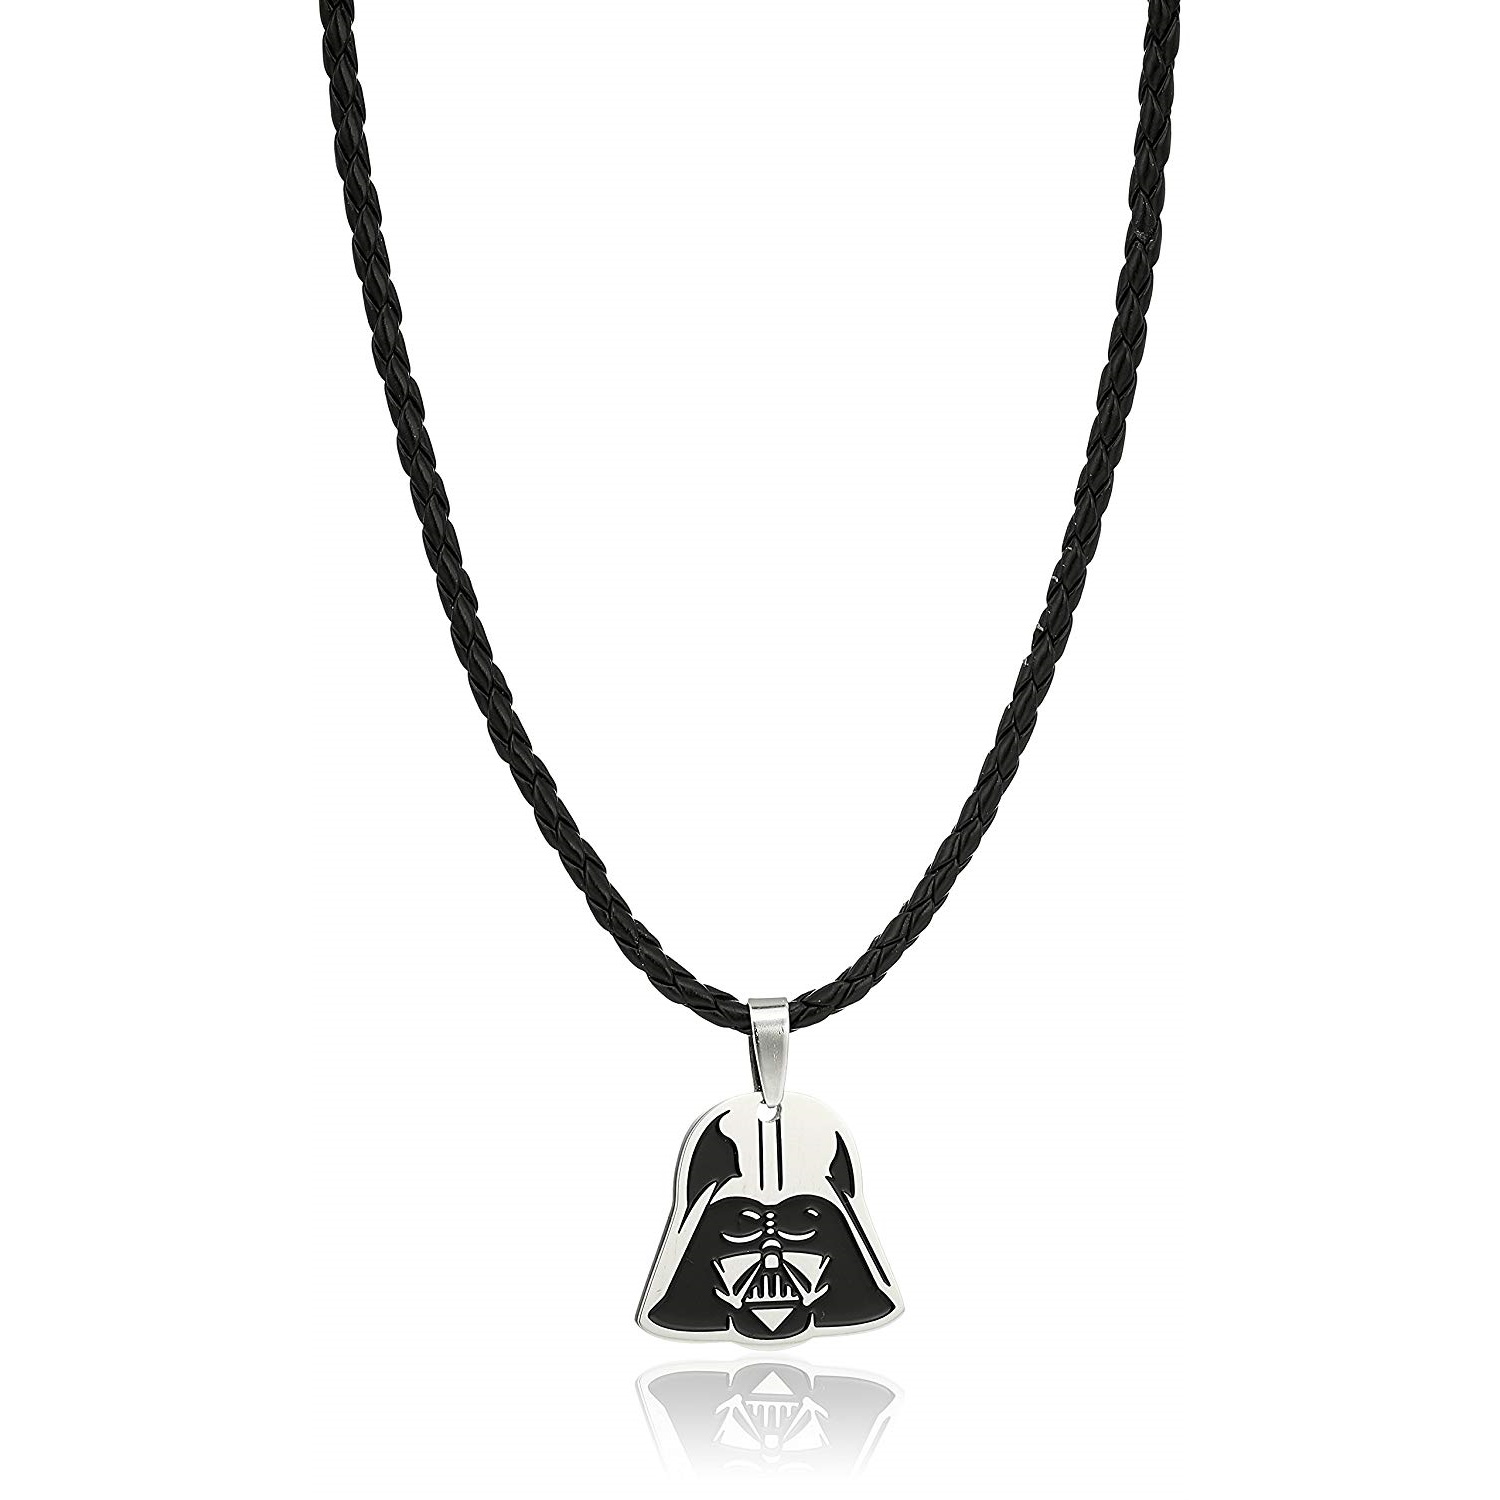 Body Vibe x Star Wars Darth Vader Black Cord Necklace on Amazon